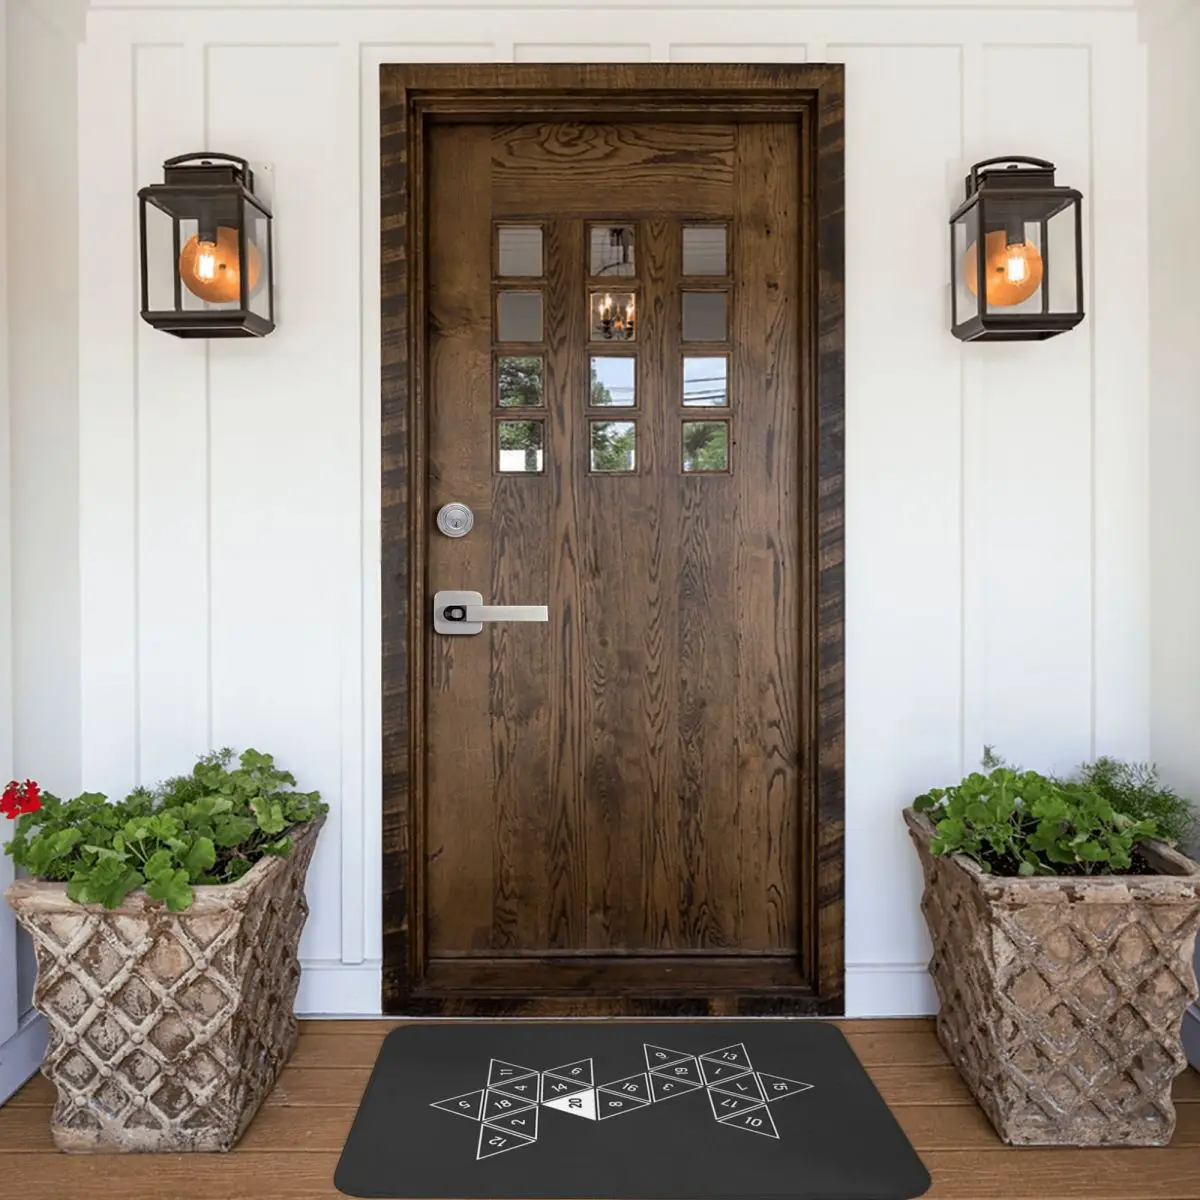 Dnd game Bathroom Mat Unrolled D20 Doormat Flannel Carpet Outdoor Rug Home Decor images - 6